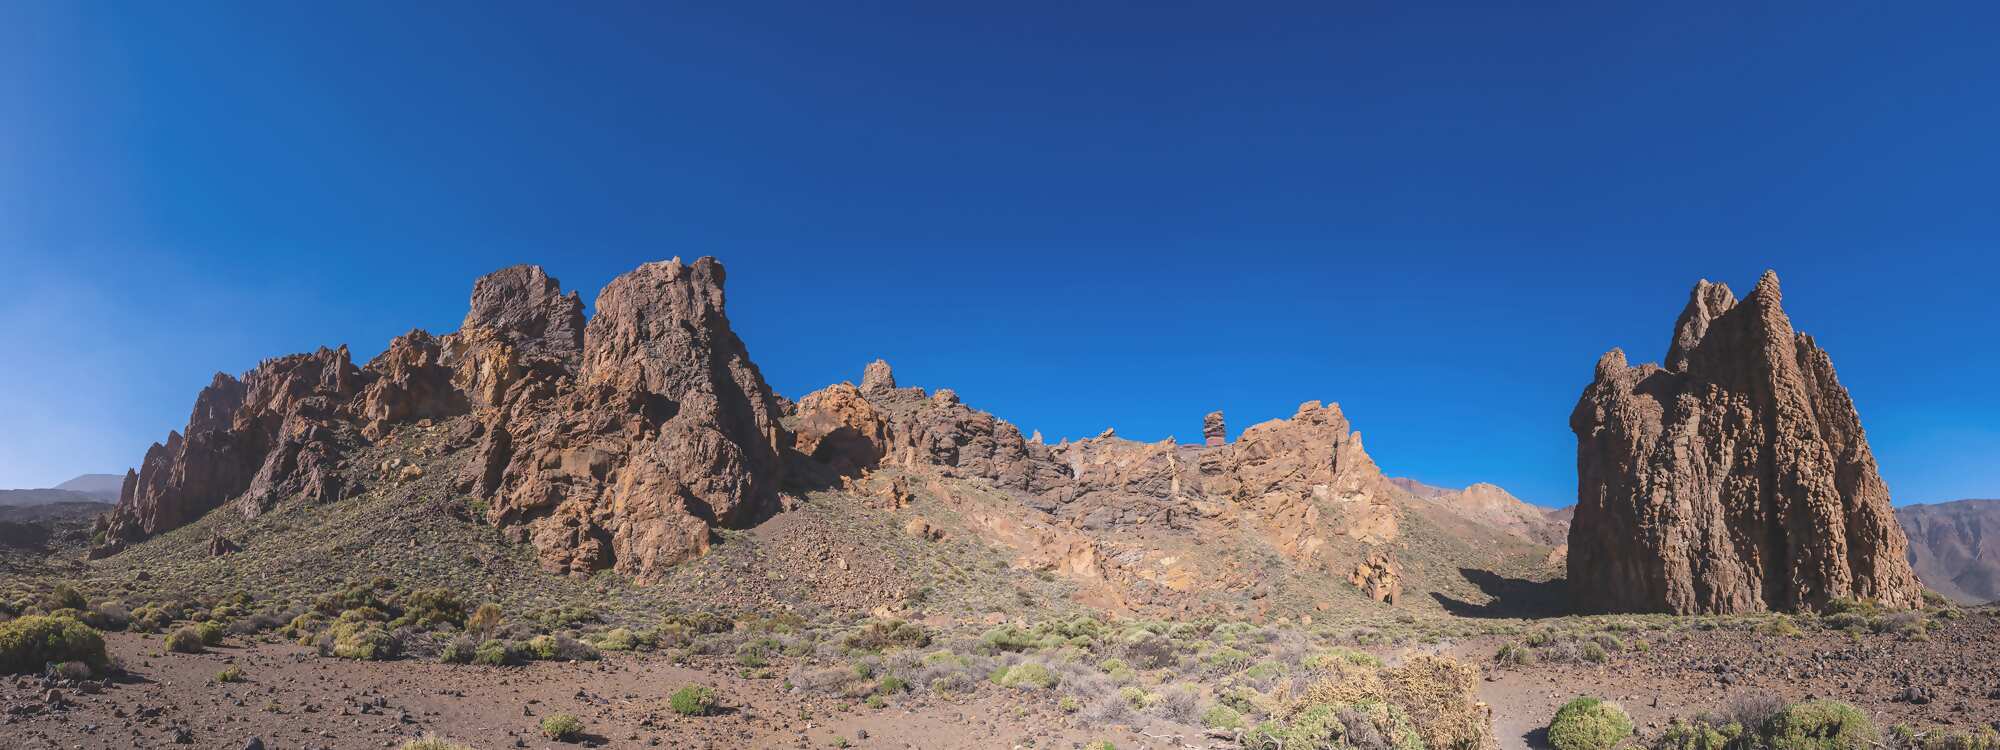 Vulkanisches Gebierge - die Kathedrale - zwischen dem Roques de Gracia und dem Roque Cinchado - Parque Nacional del Teide - Teneriffa